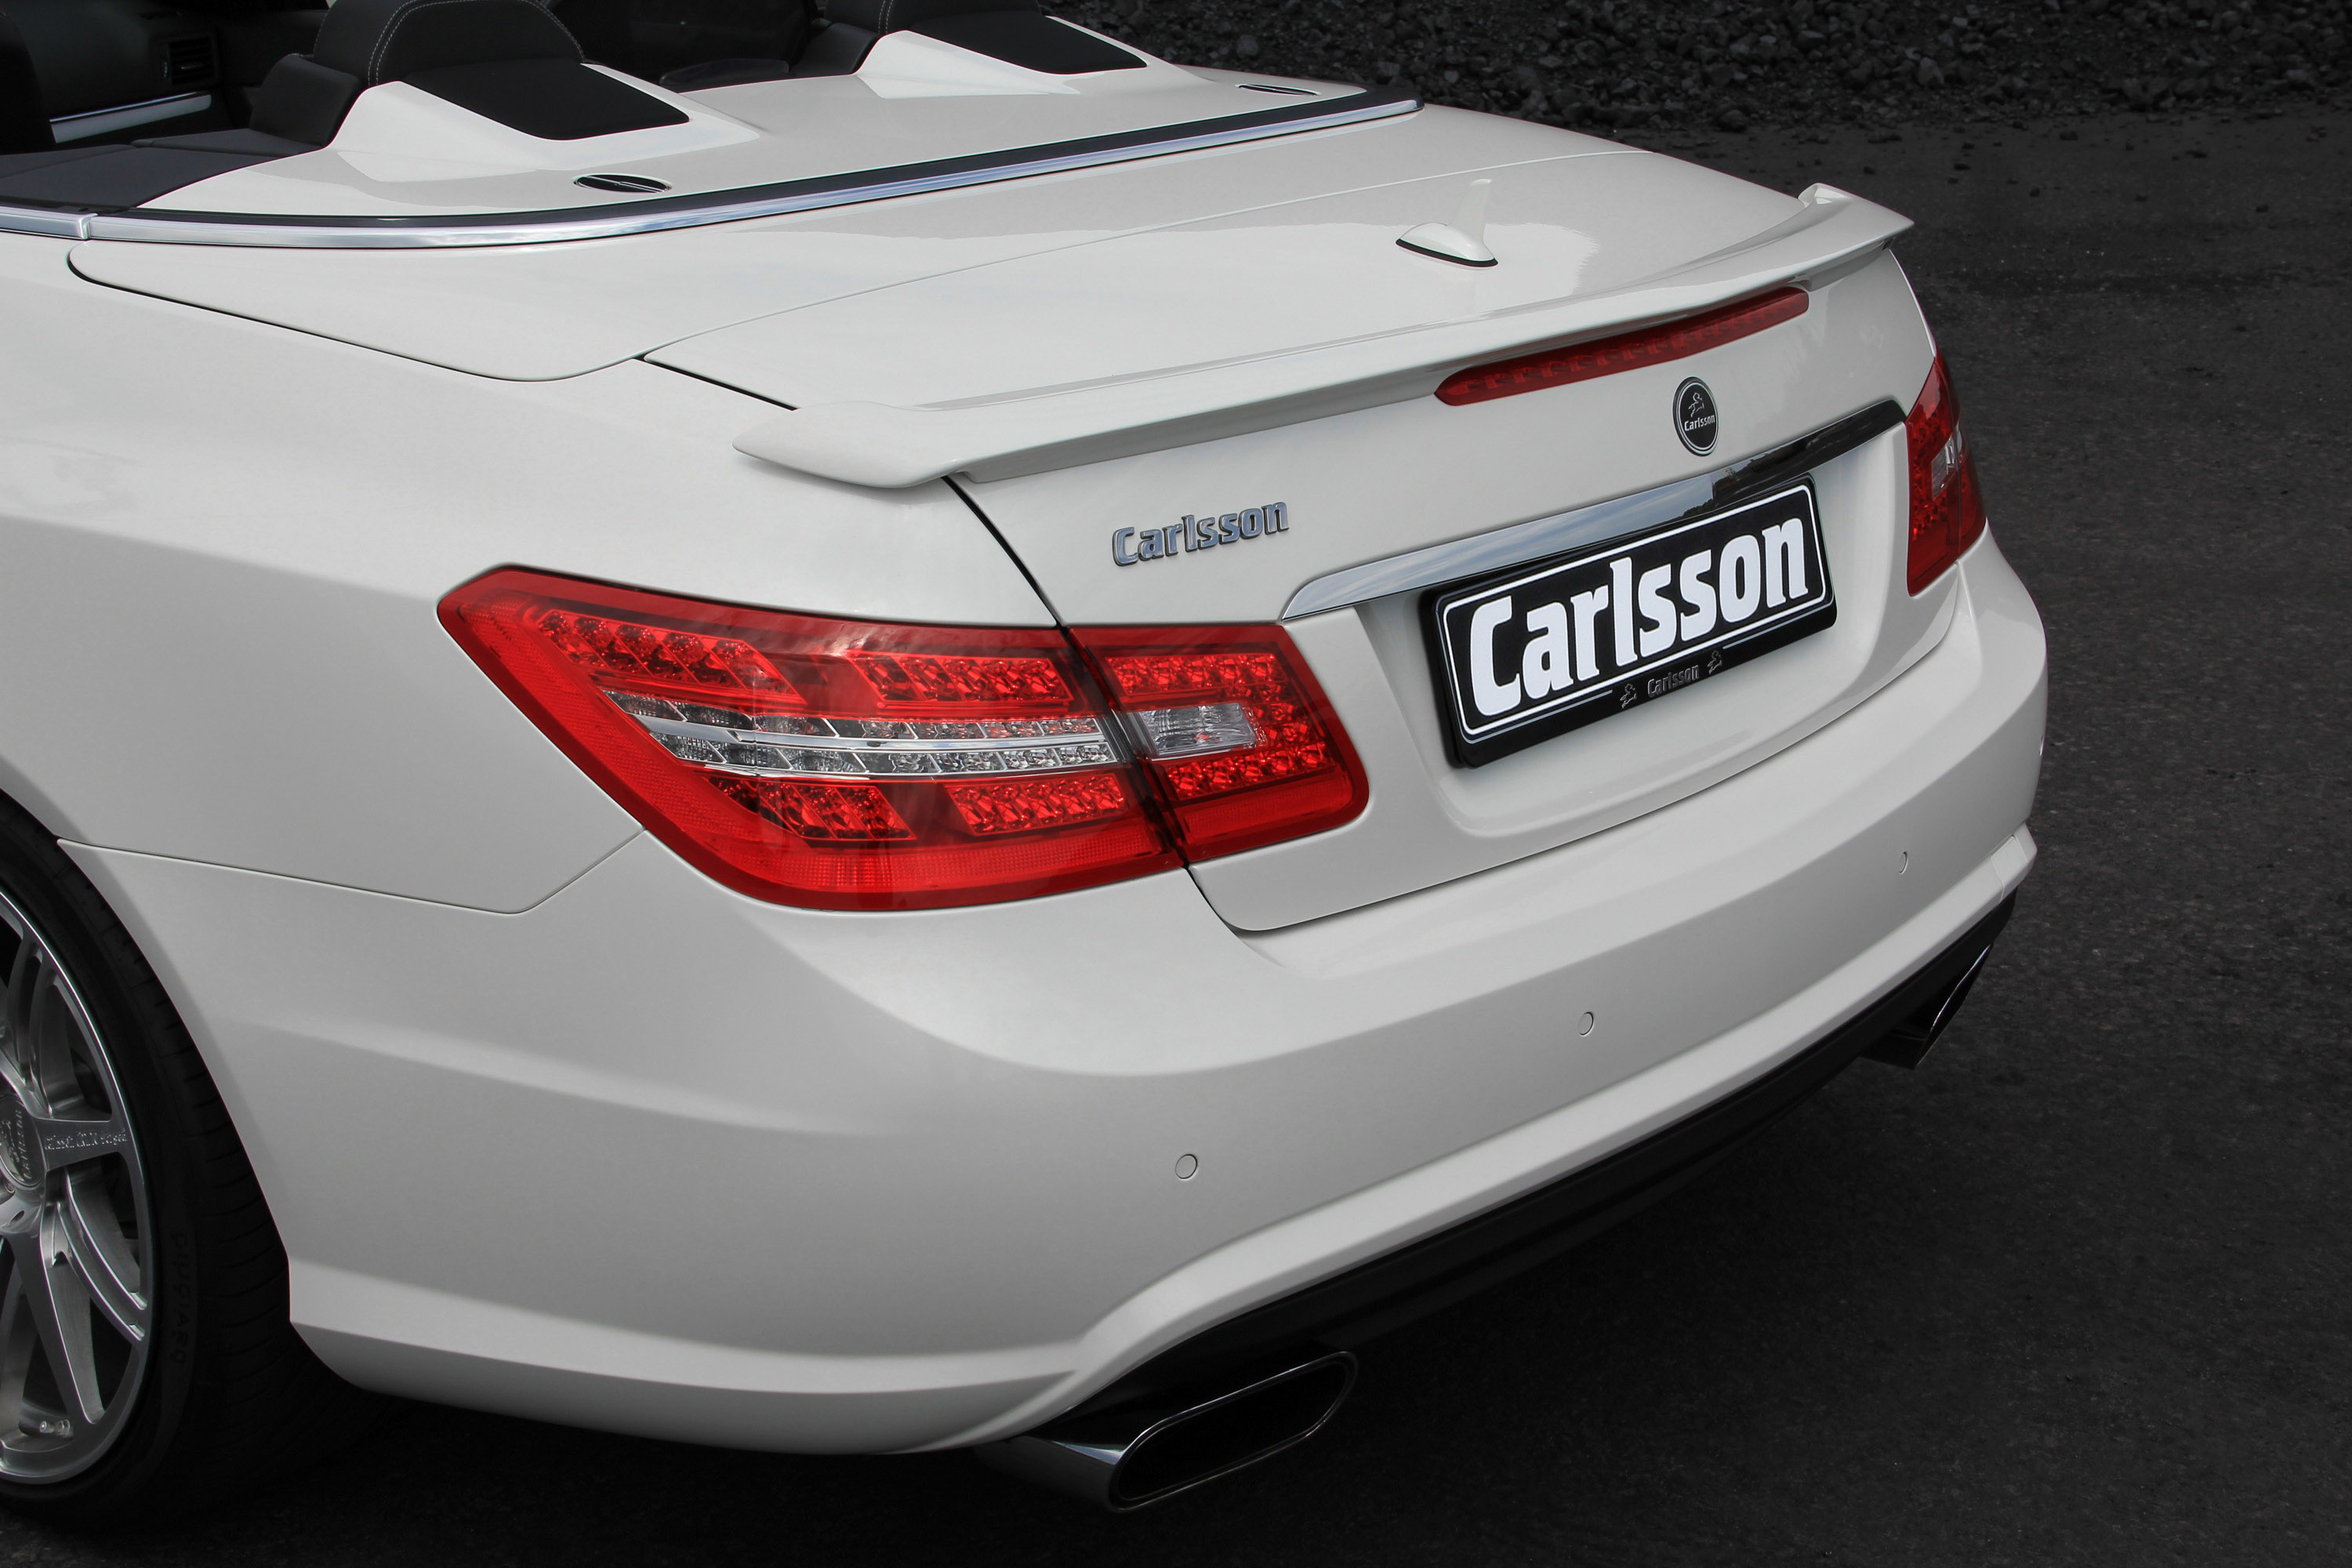 Carlsson Mercedes-Benz E-Class Cabriolet